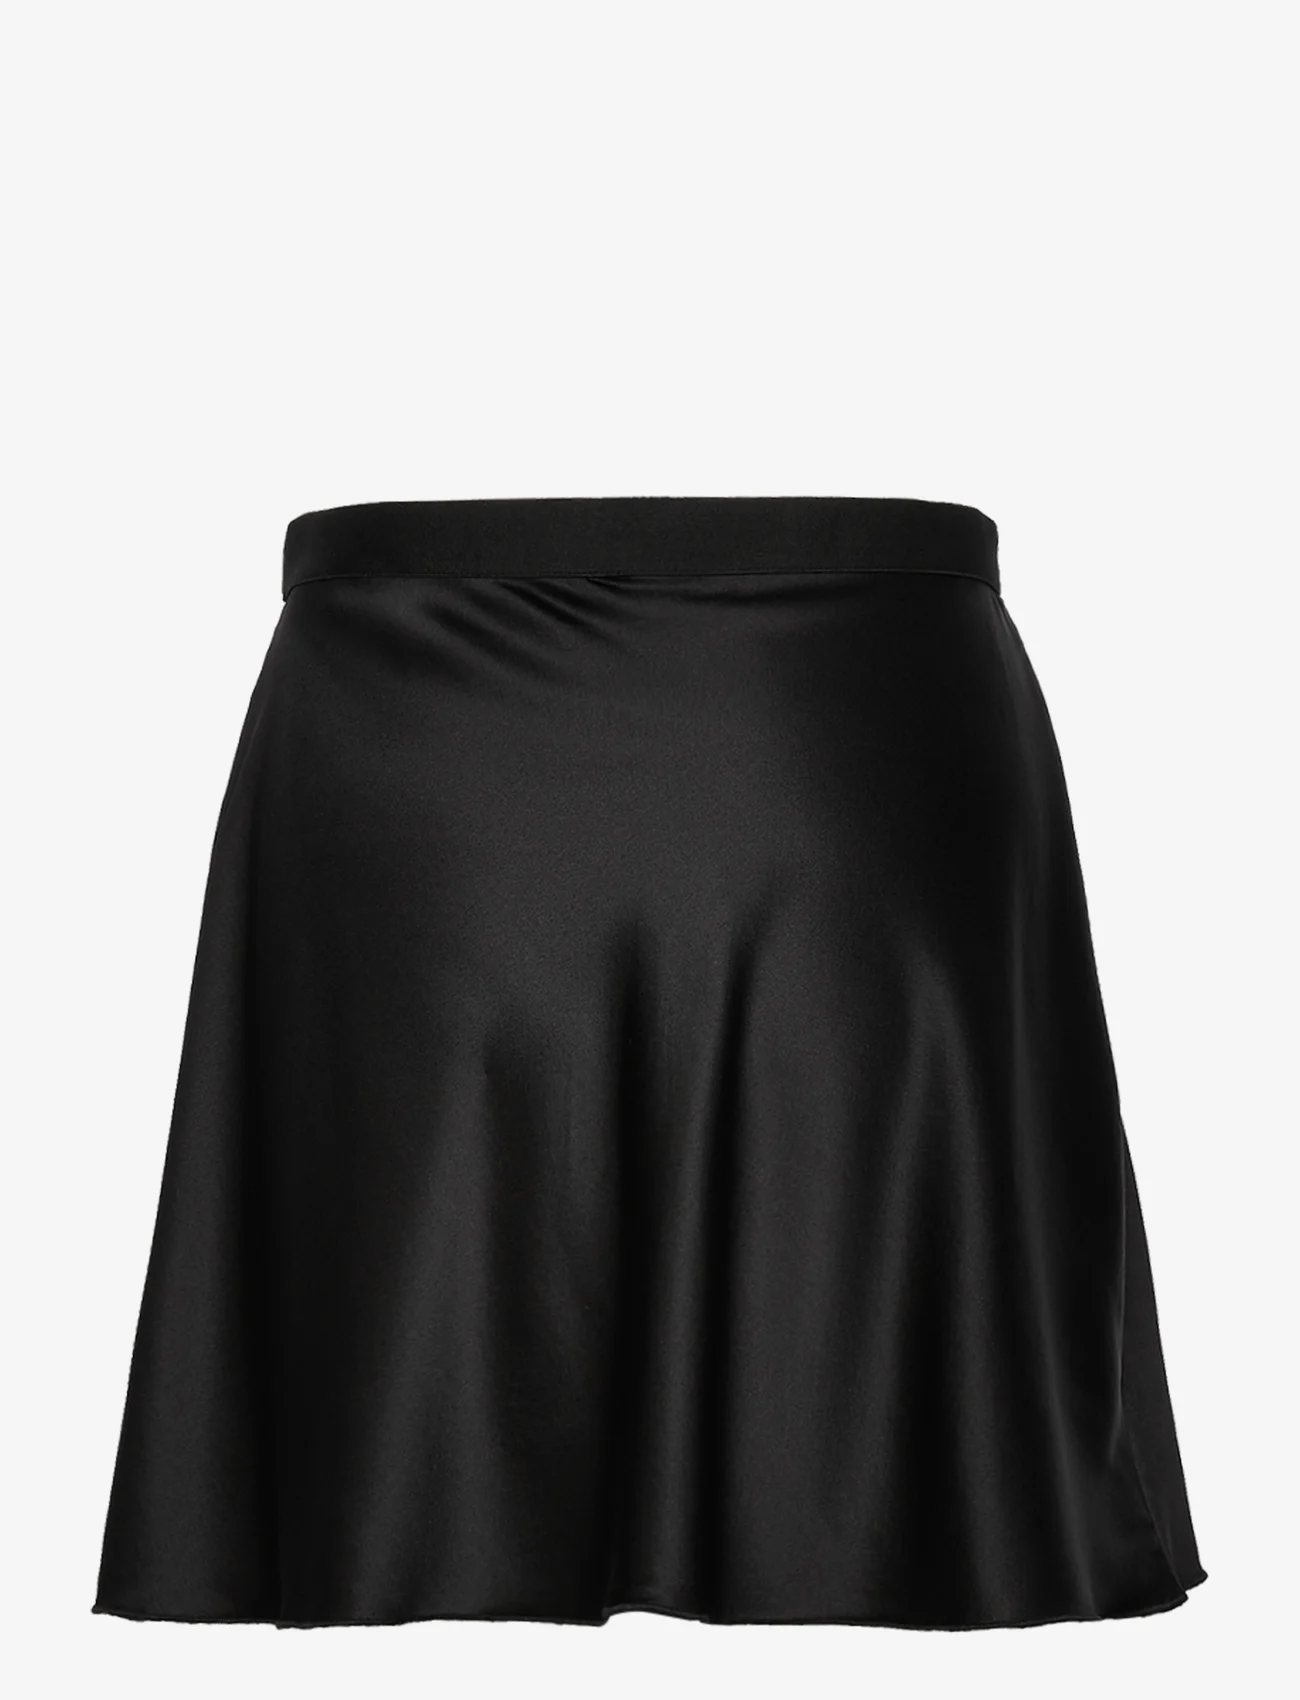 Ahlvar Gallery - Hana short skirt - short skirts - black - 1